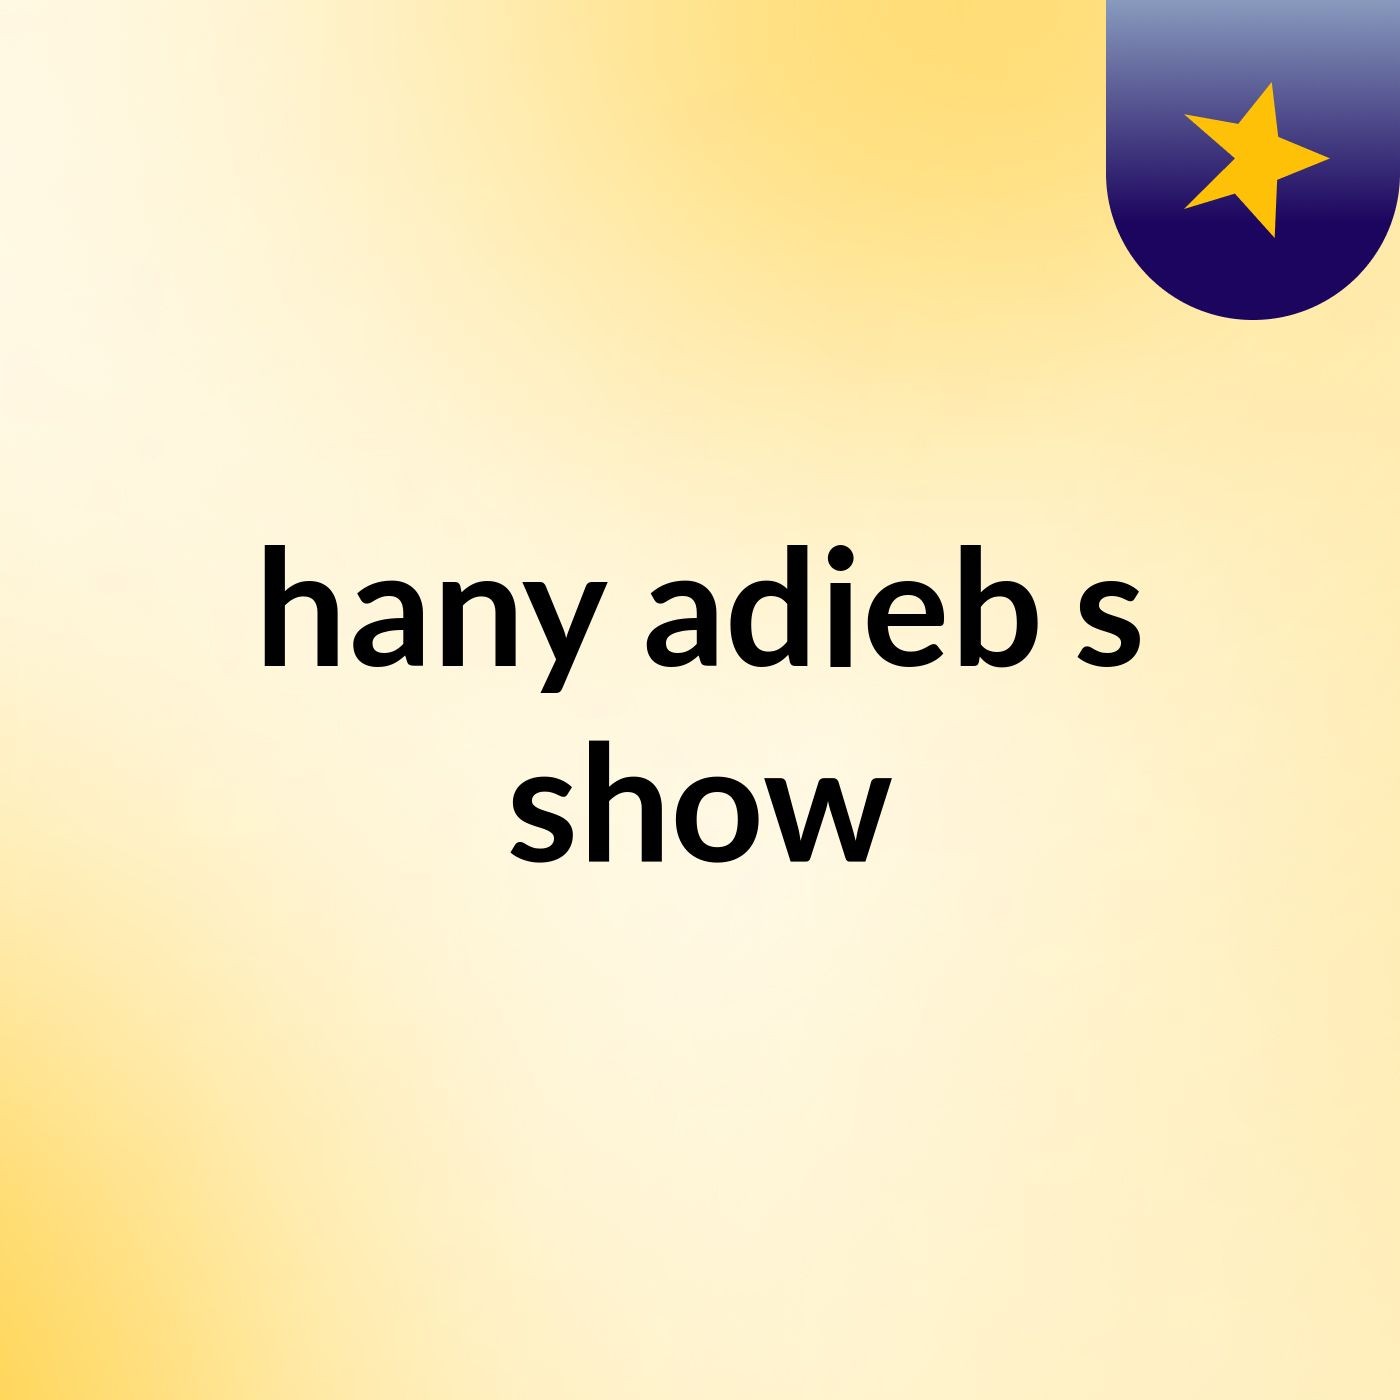 hany adieb's show